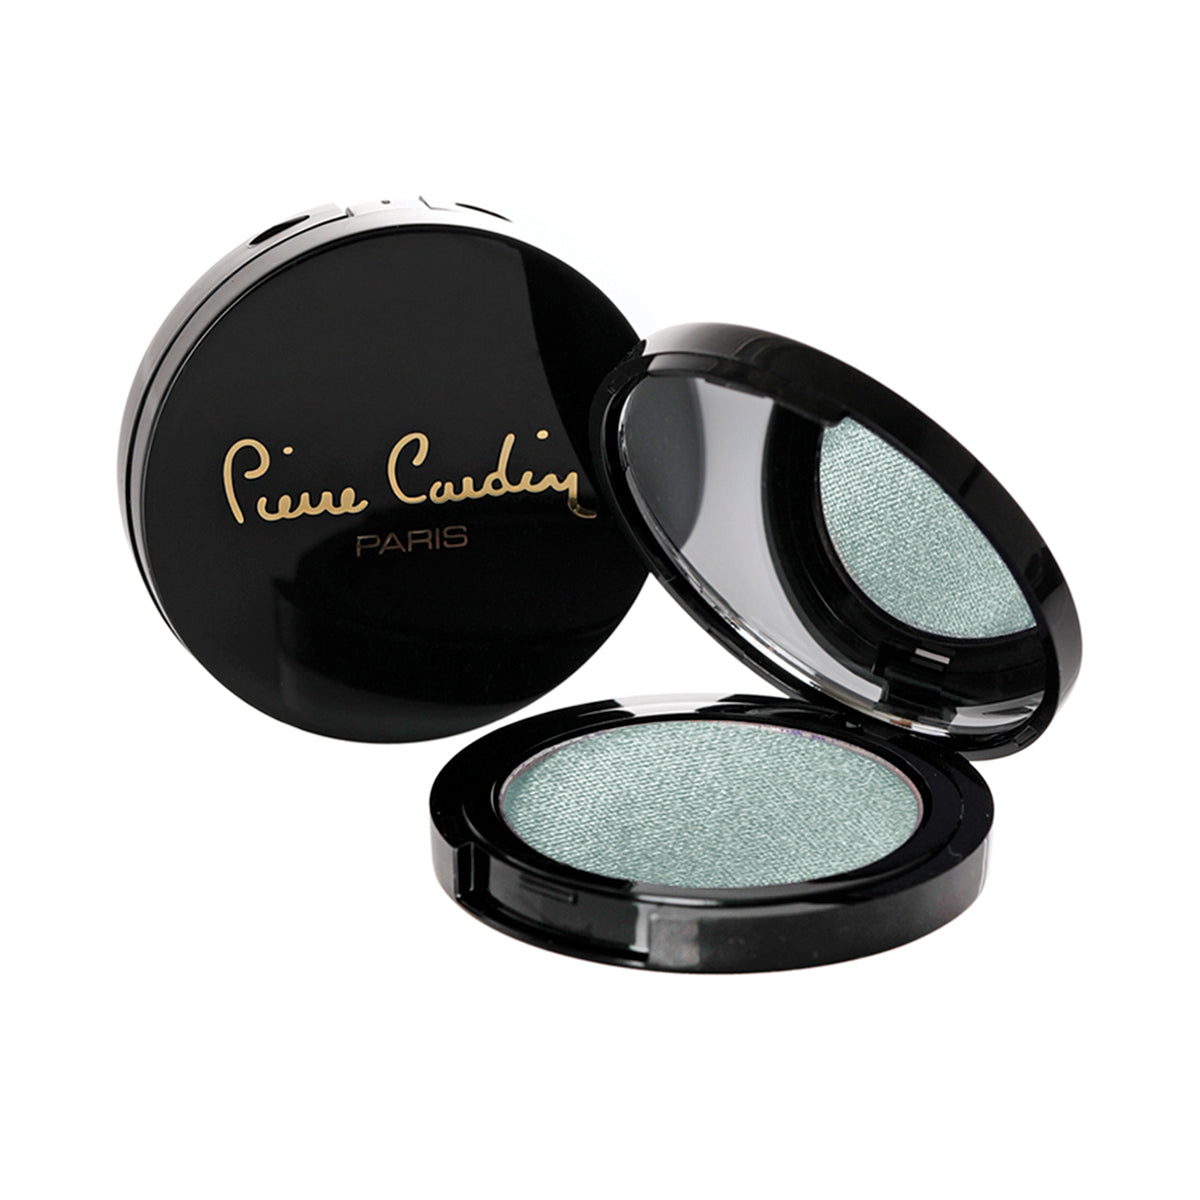 Pierre Cardin Pearly Velvet Eyeshadow Dark Green 180 - 4,0 gr